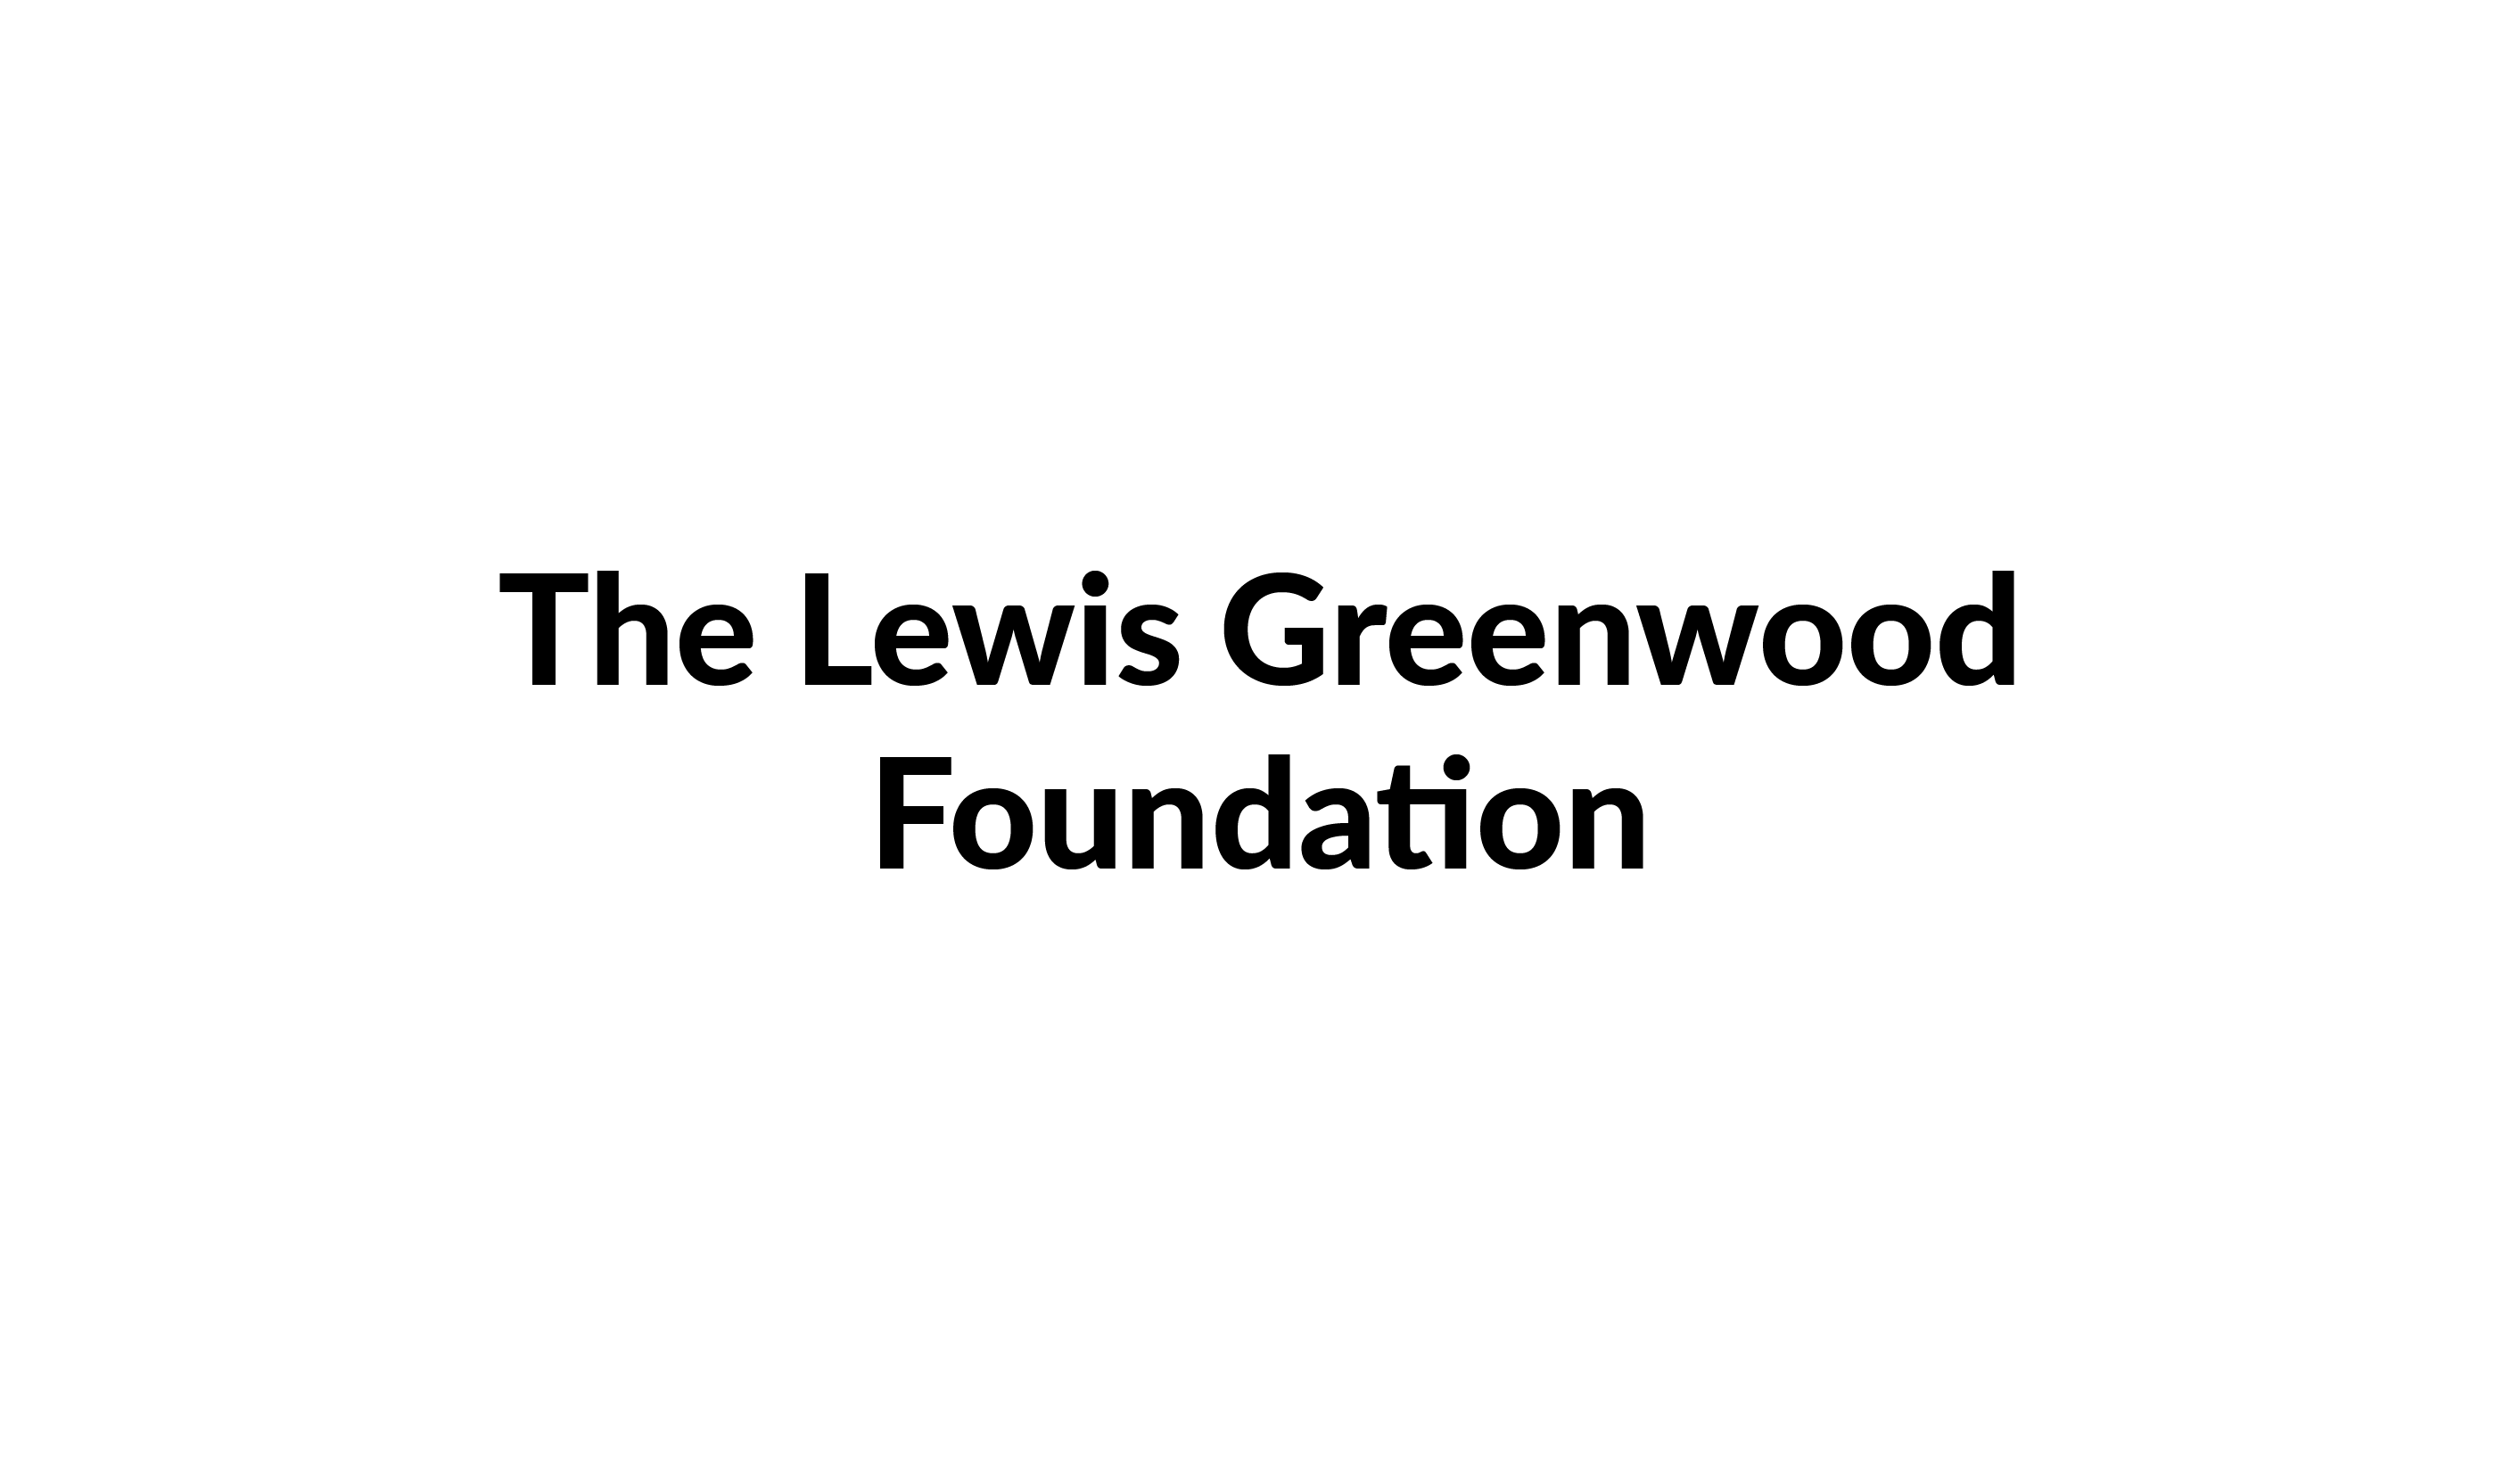 The Lewis Greenwood Foundation